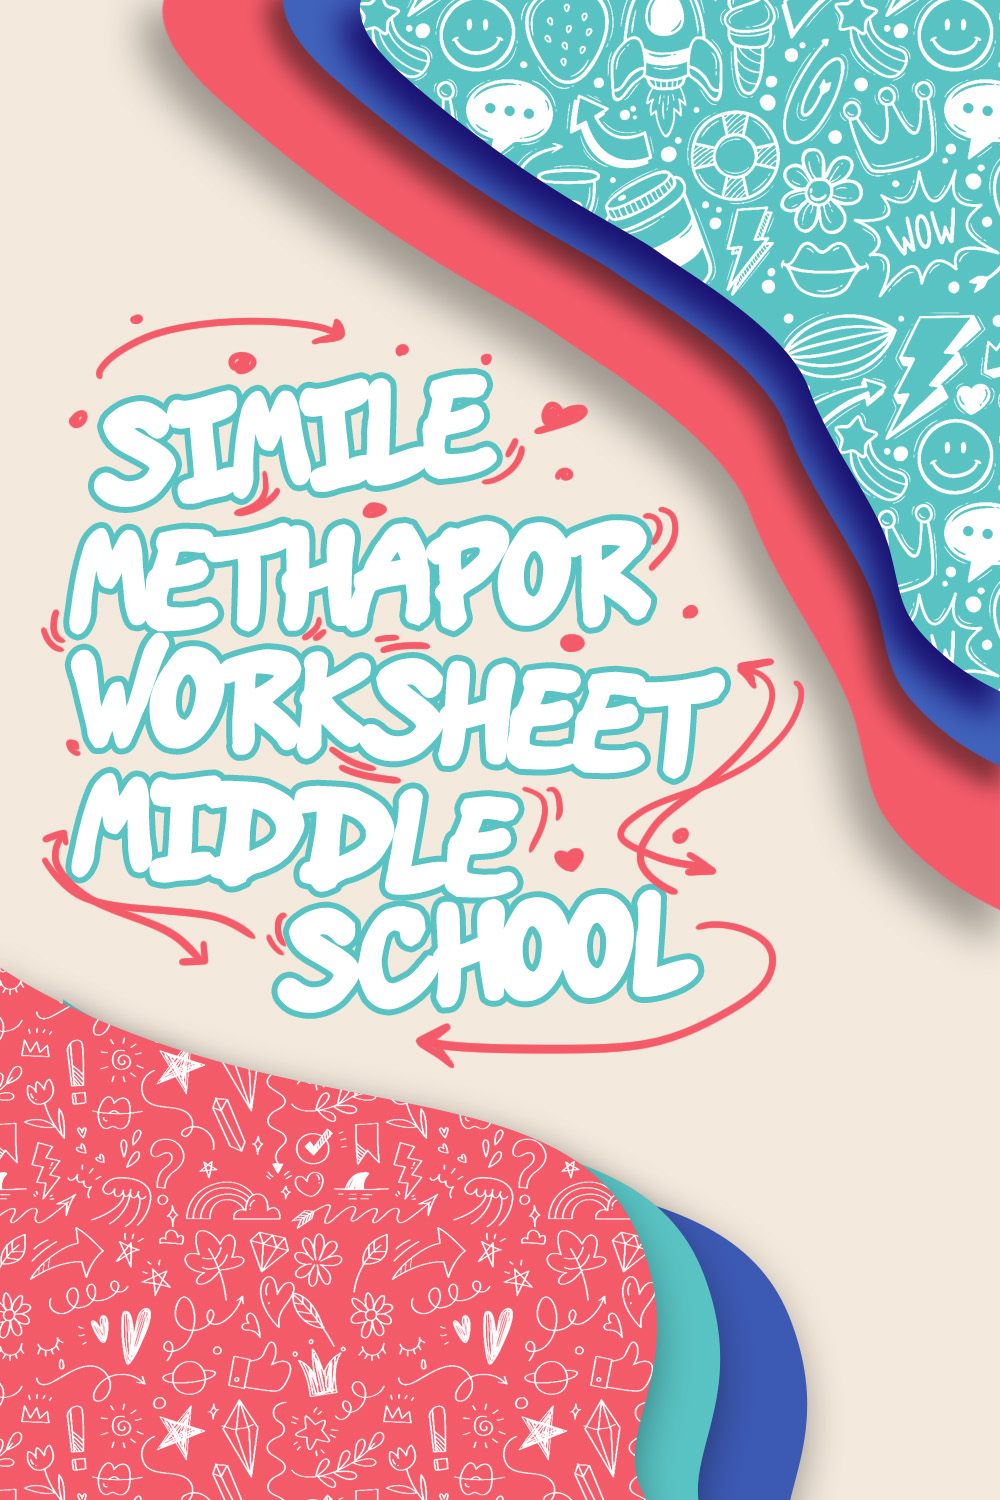 20-simile-metaphor-worksheets-middle-school-free-pdf-at-worksheeto